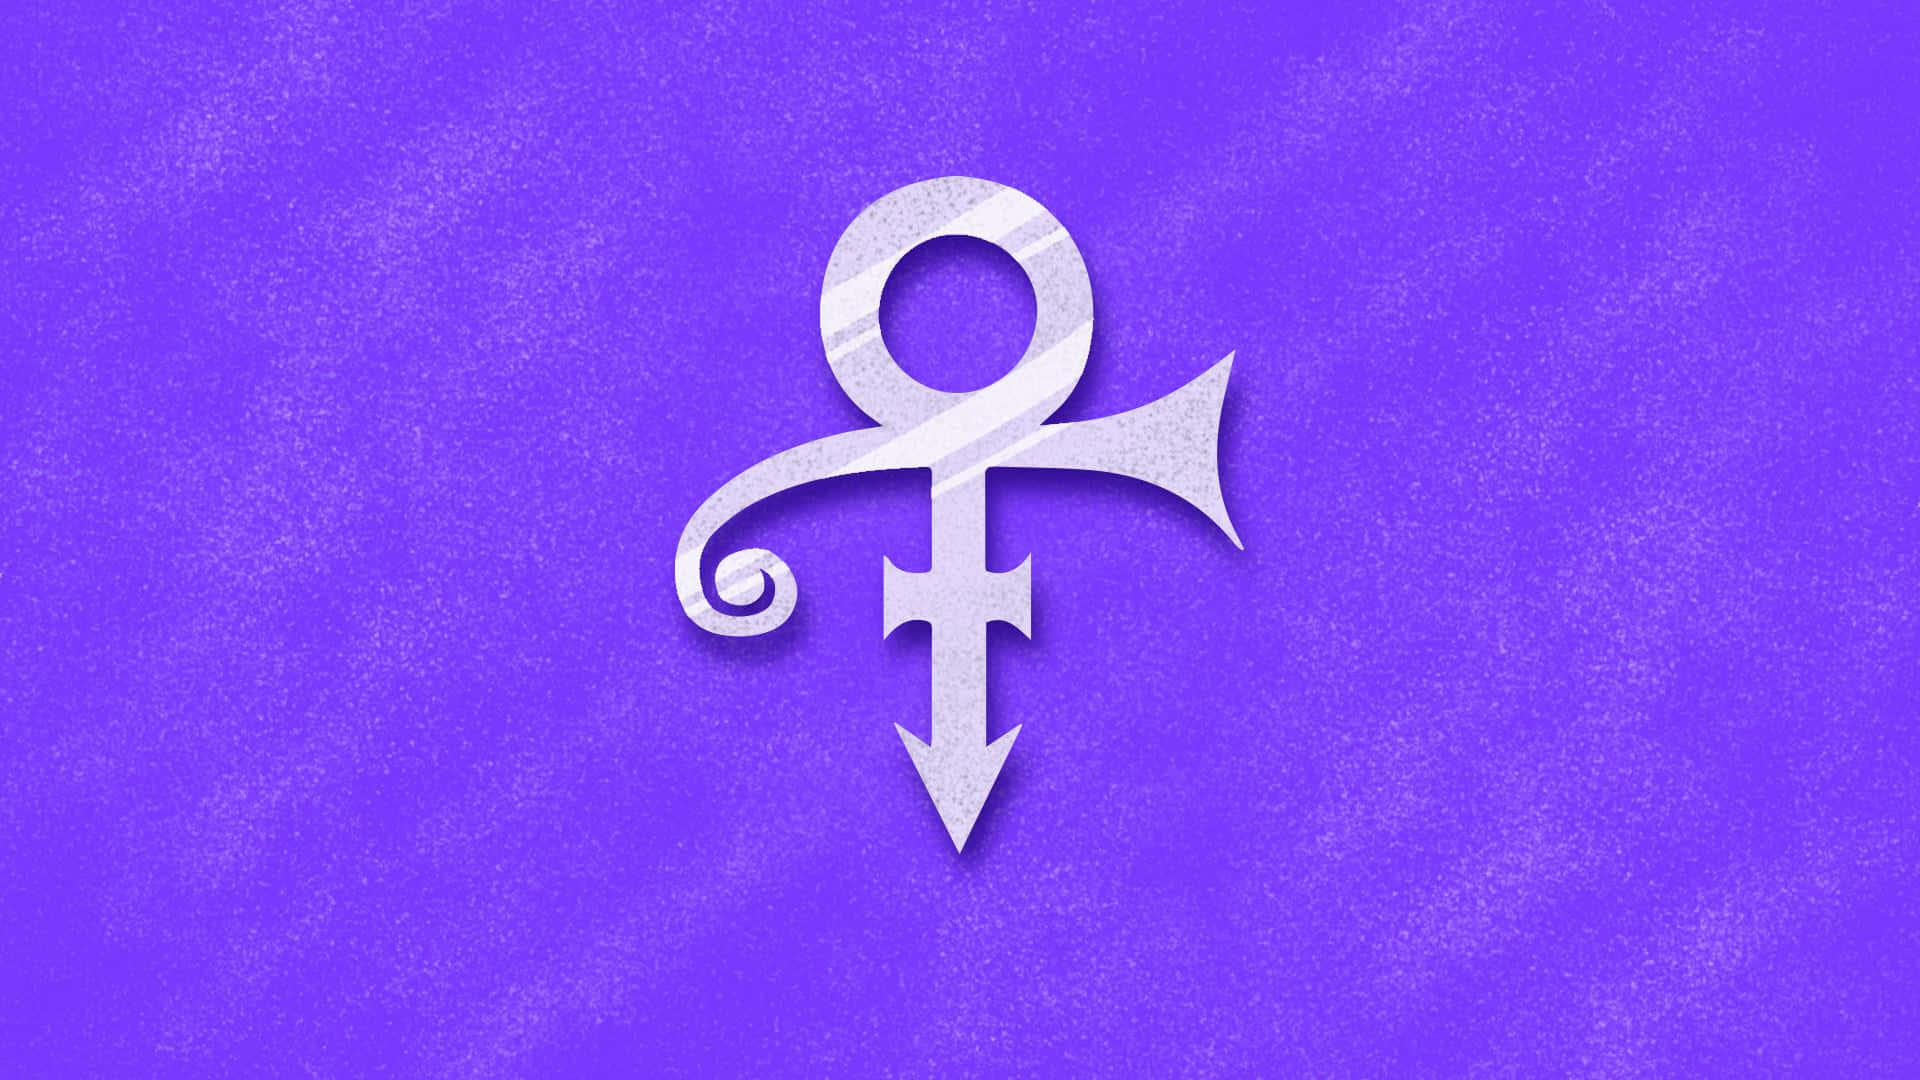 Prince's signature symbol Wallpaper